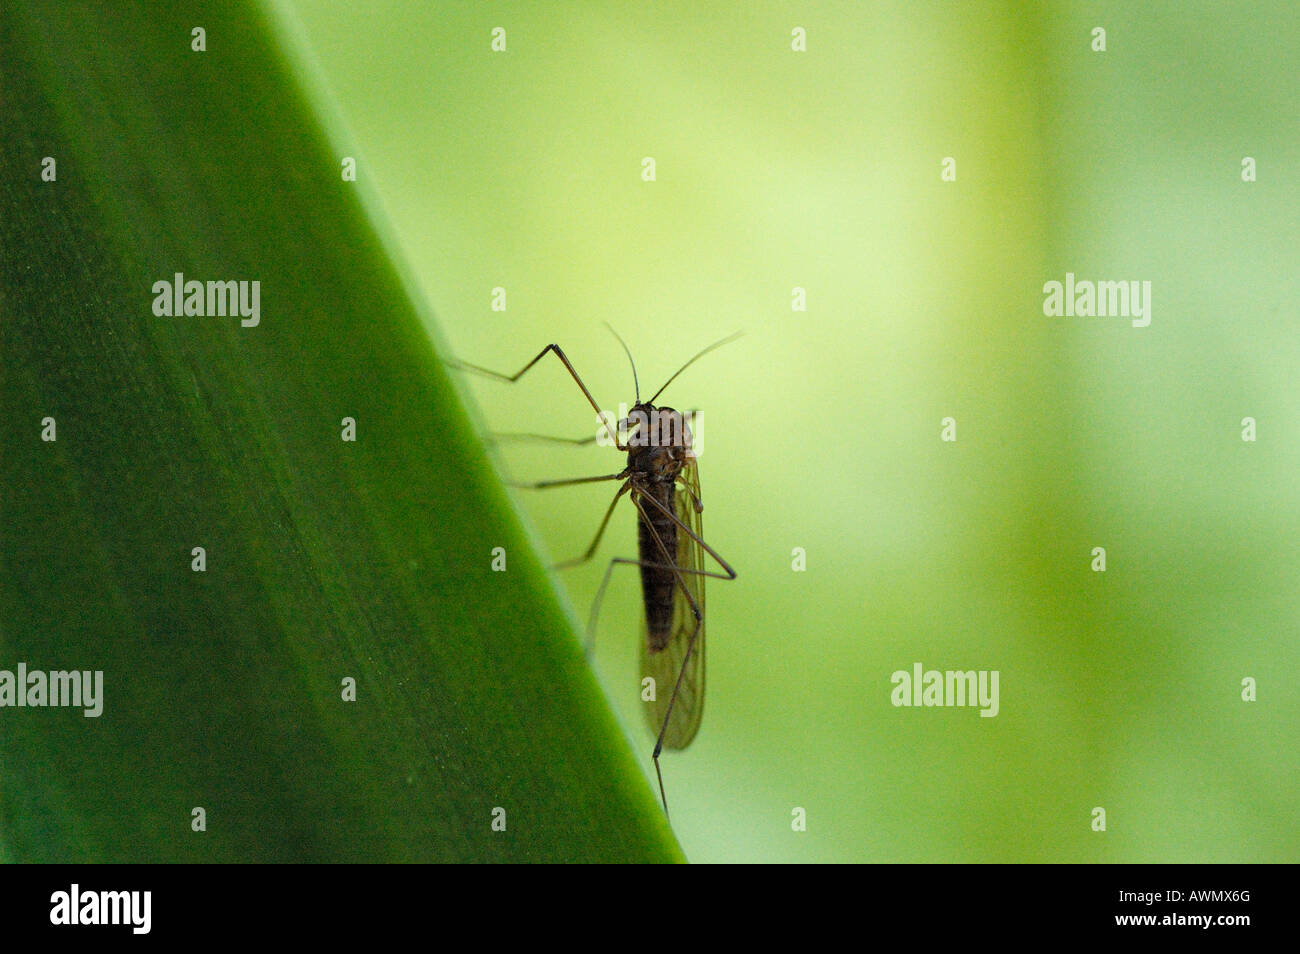 Midge, mosquito sitting on blade of grass Stock Photo